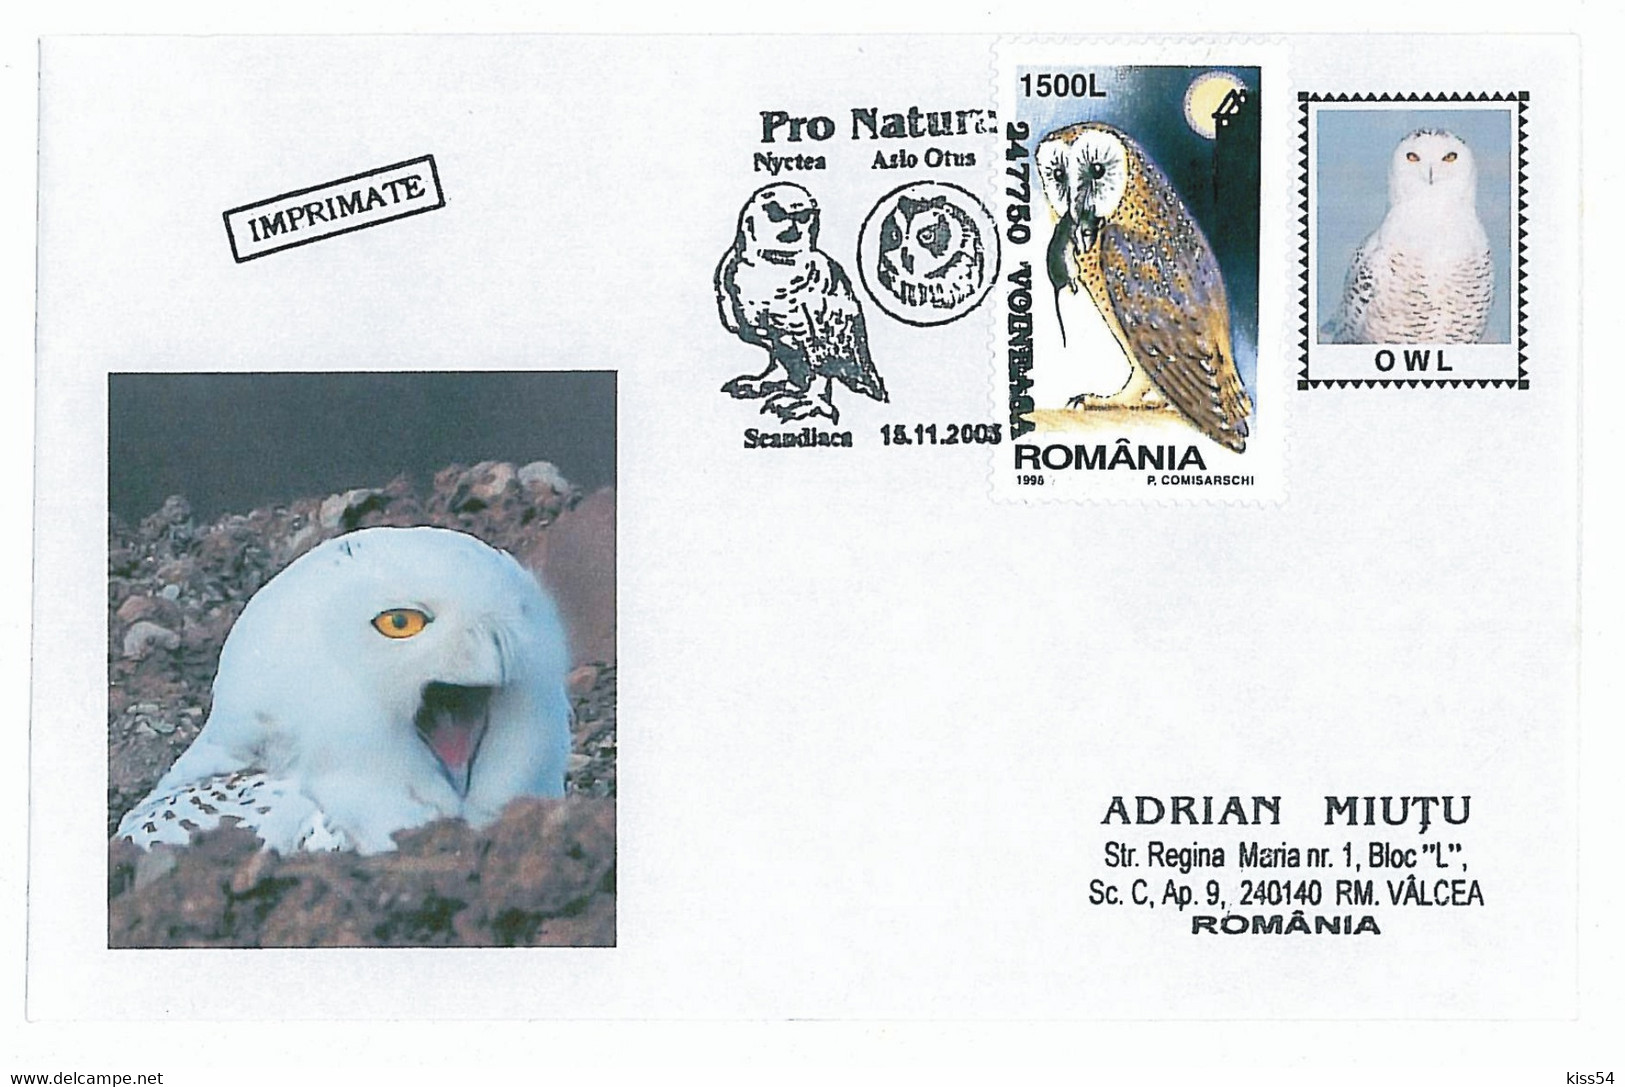 COV 68 - 253 OWL, Romania - Cover - Used - 2005 - Owls